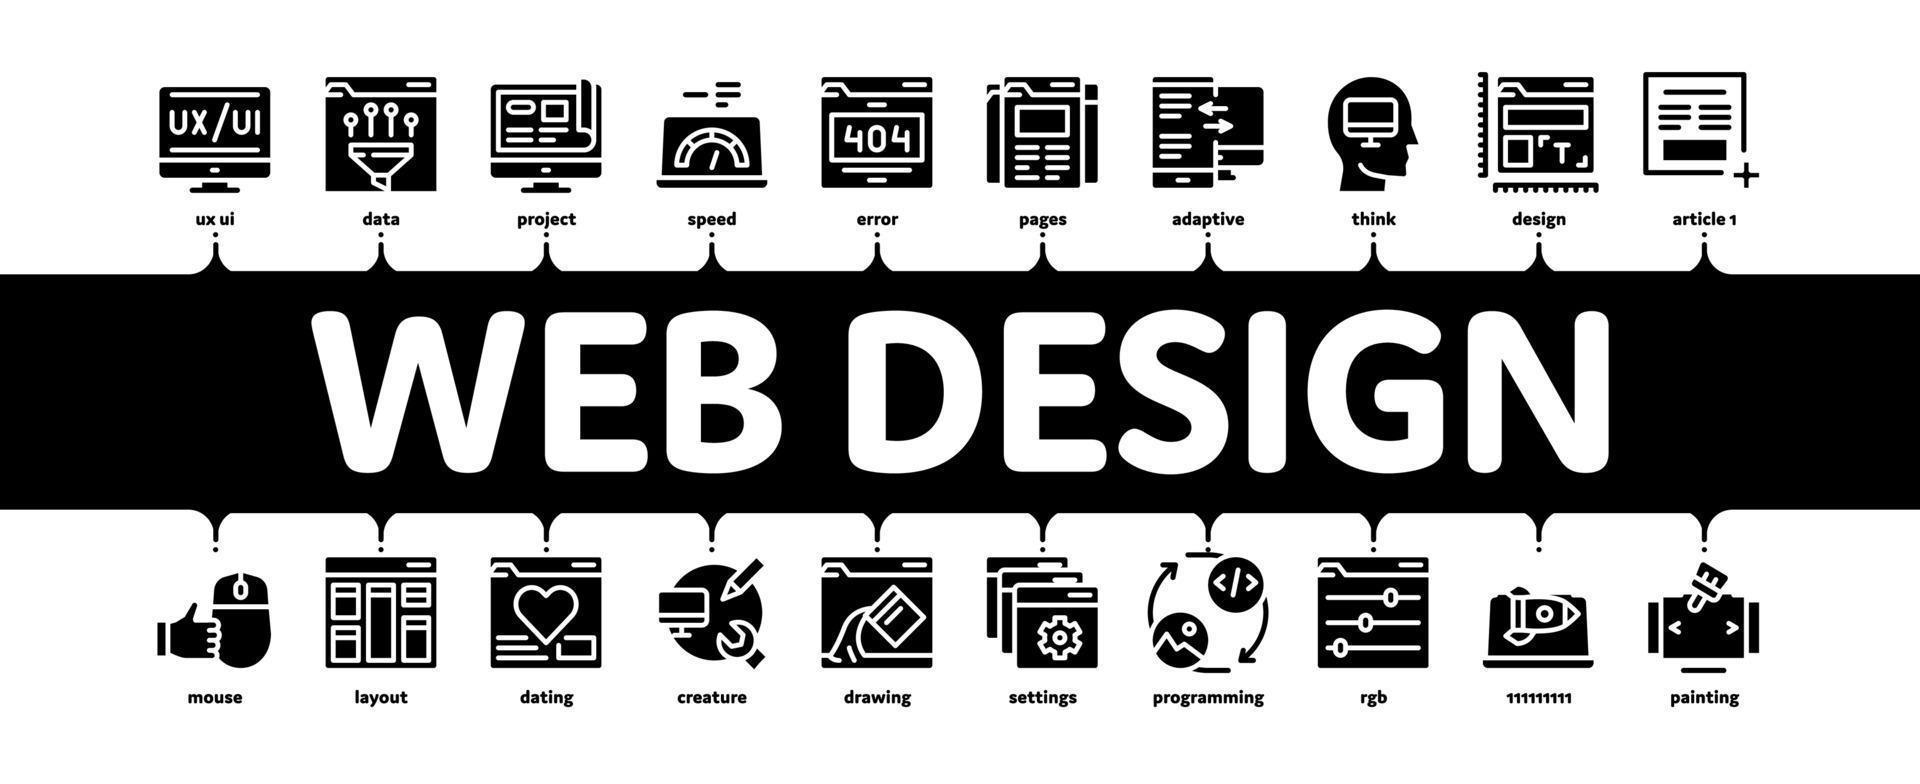 Web Design Development Minimal Infographic Banner Vector